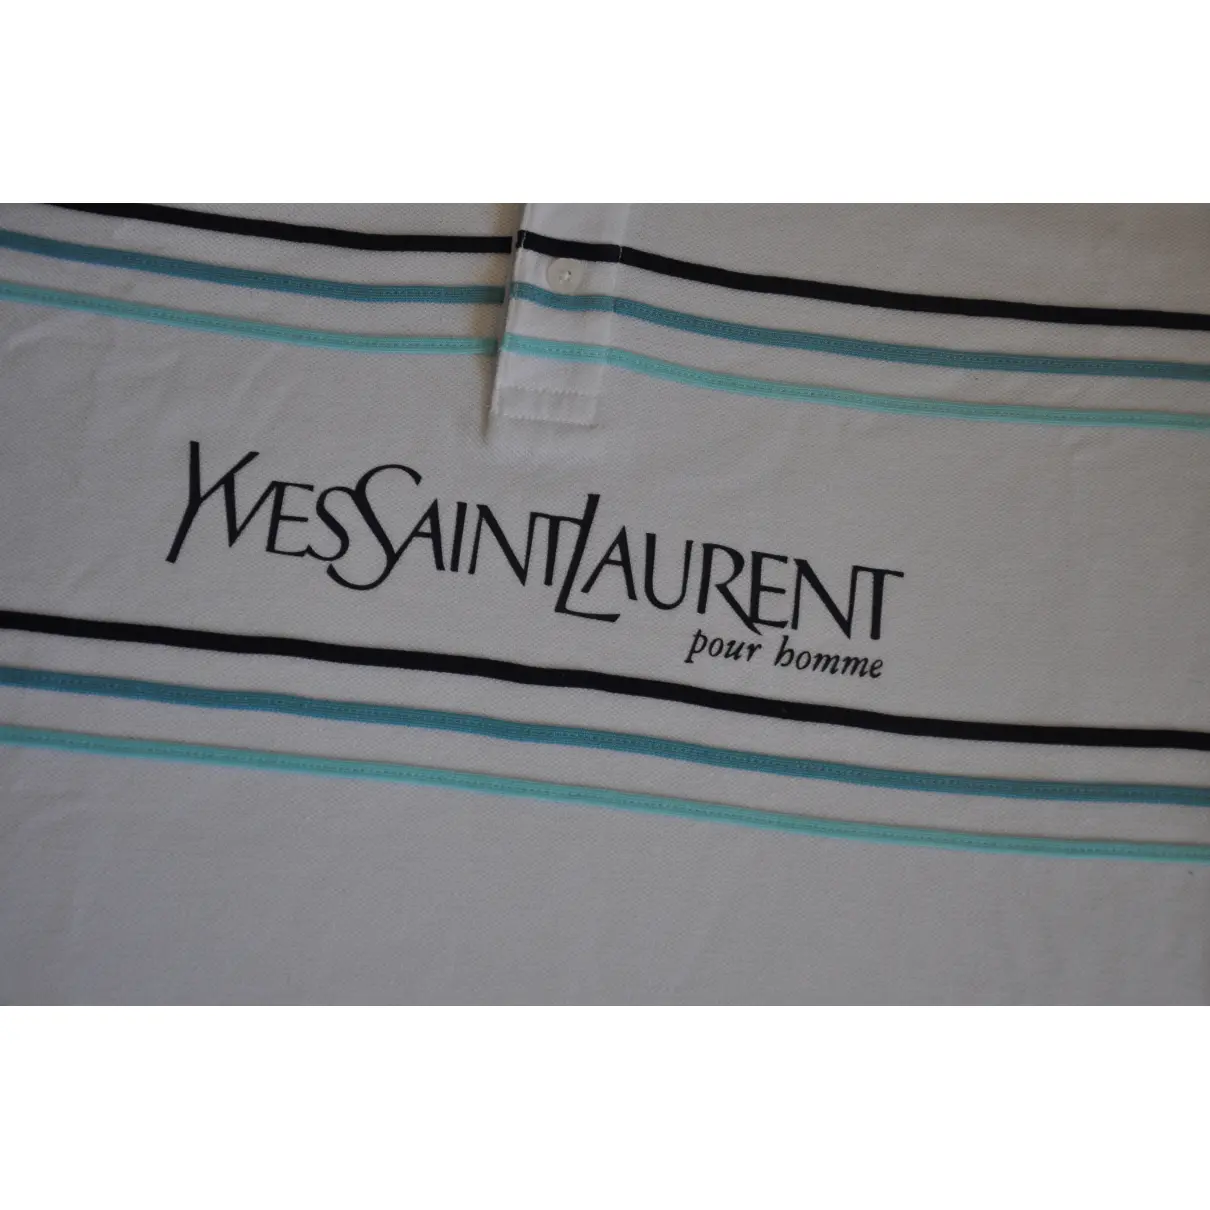 Buy Yves Saint Laurent Polo shirt online - Vintage